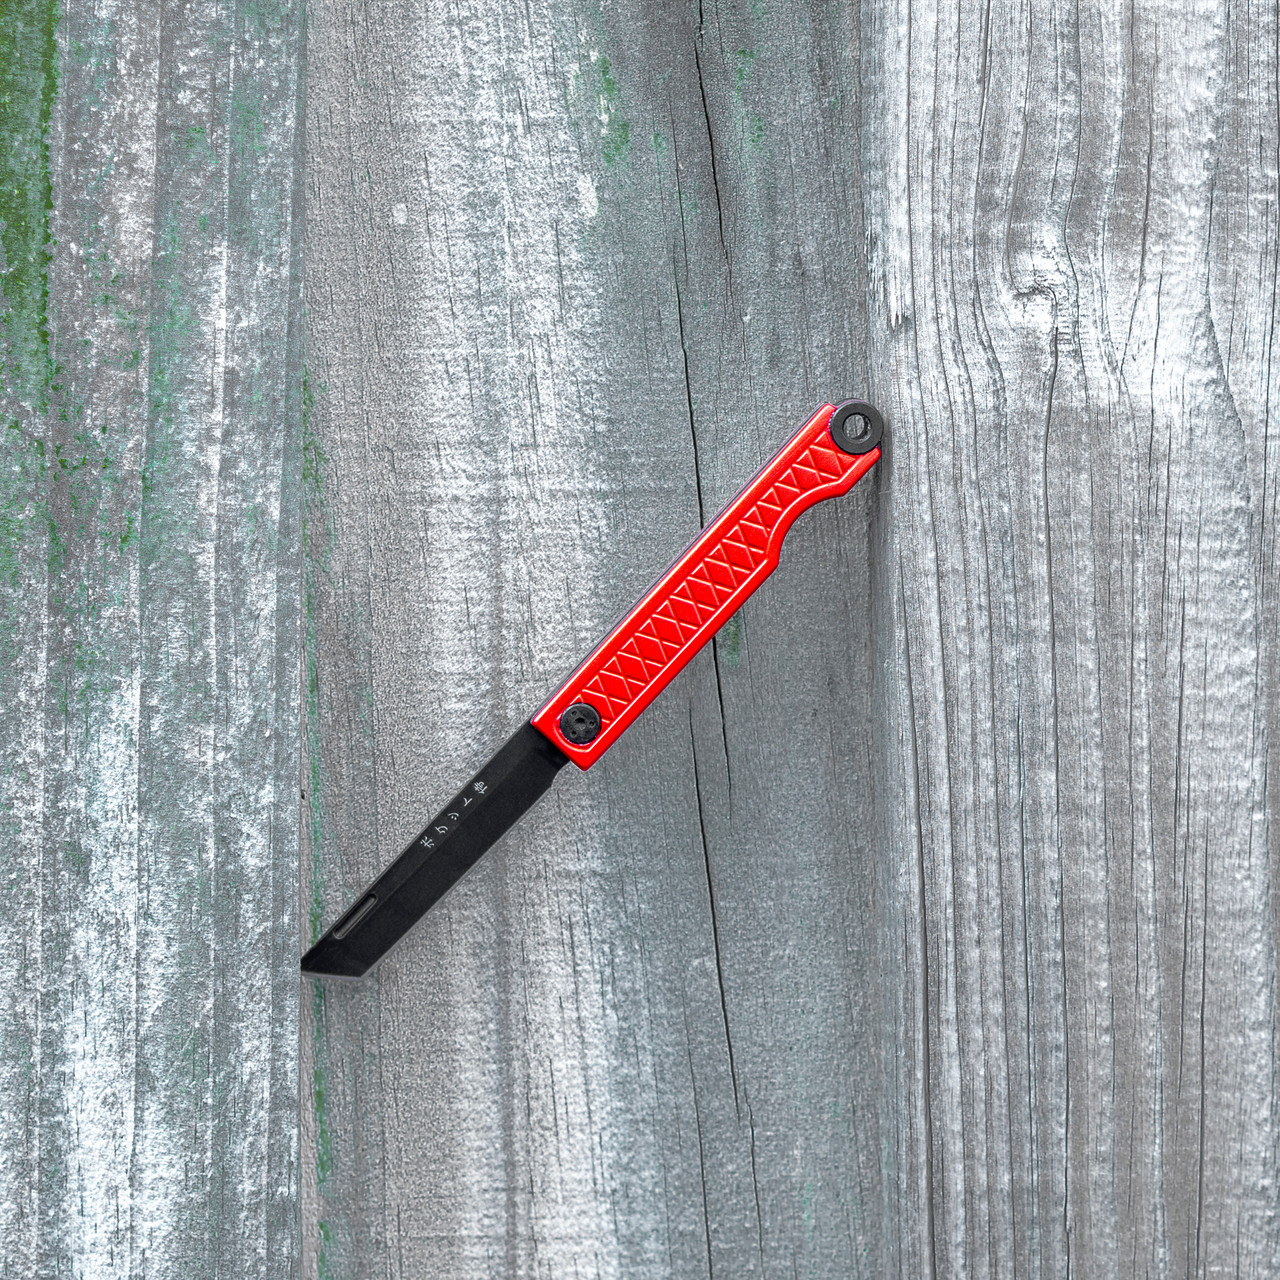 Get Your Pocket Samurai Keychain Knife - Slipjoint Edition